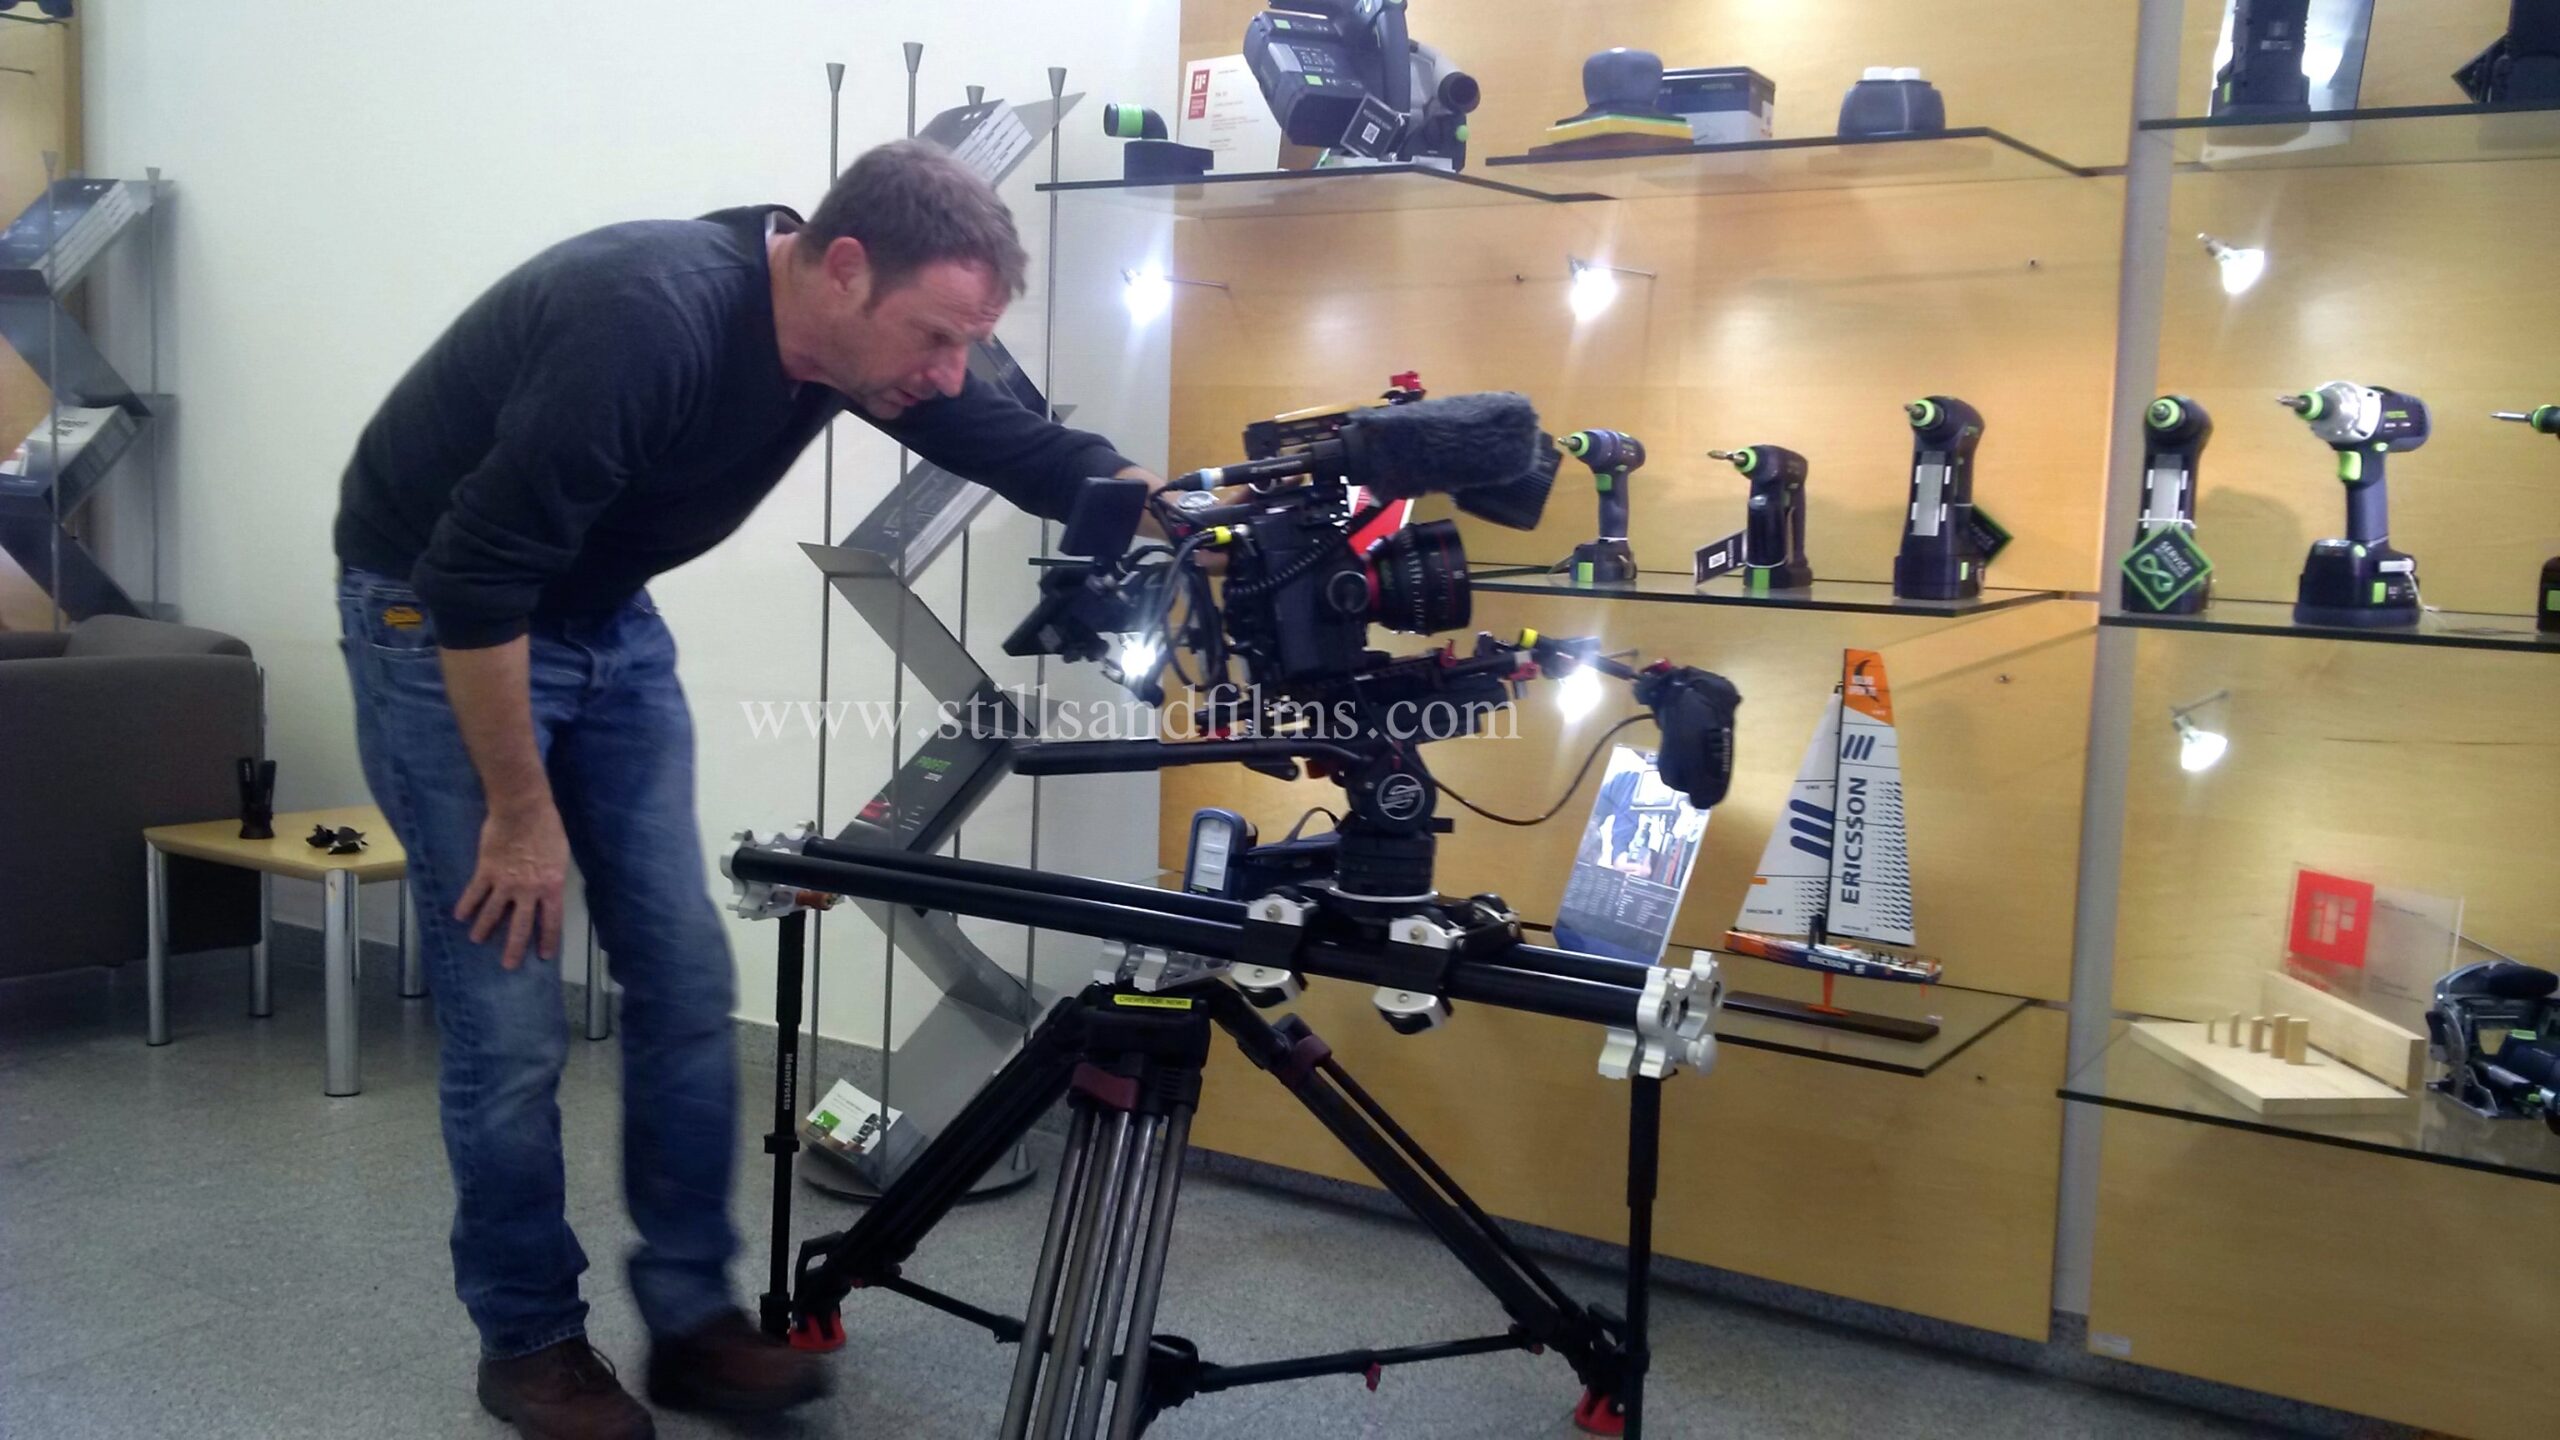 Filming product videos at Festool in Stuttgart, Germany